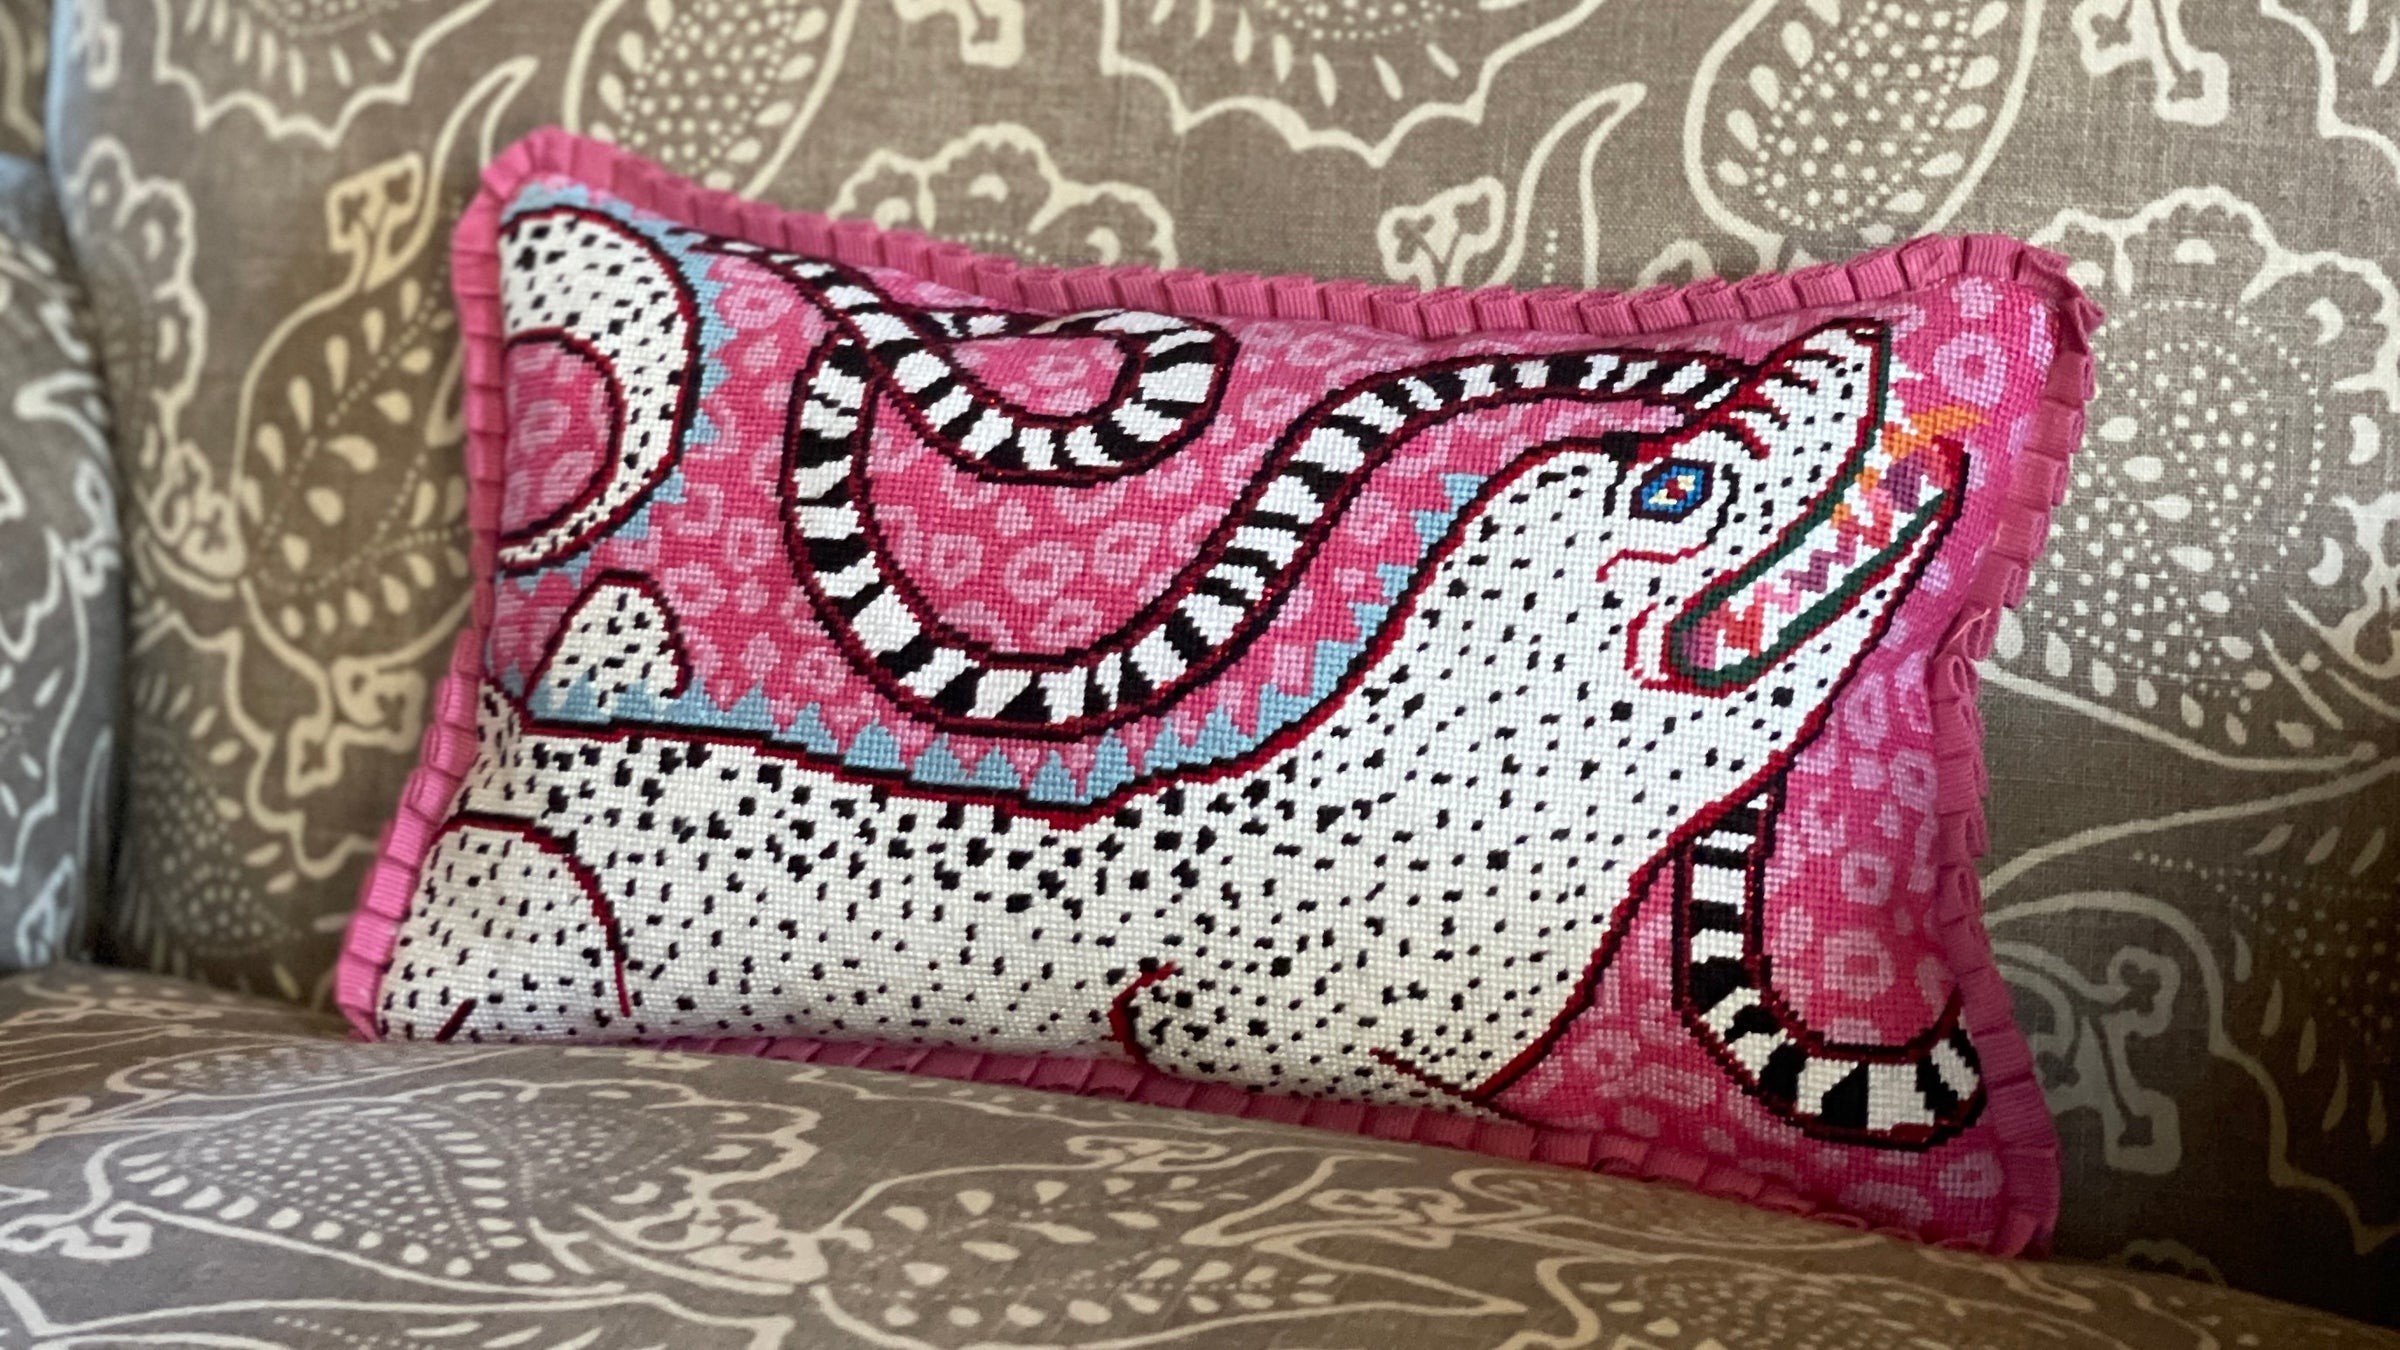 Gator Snake Needlepoint Canvas Finished with Pink Ribbon Trim by Bargello Needlepoint shop